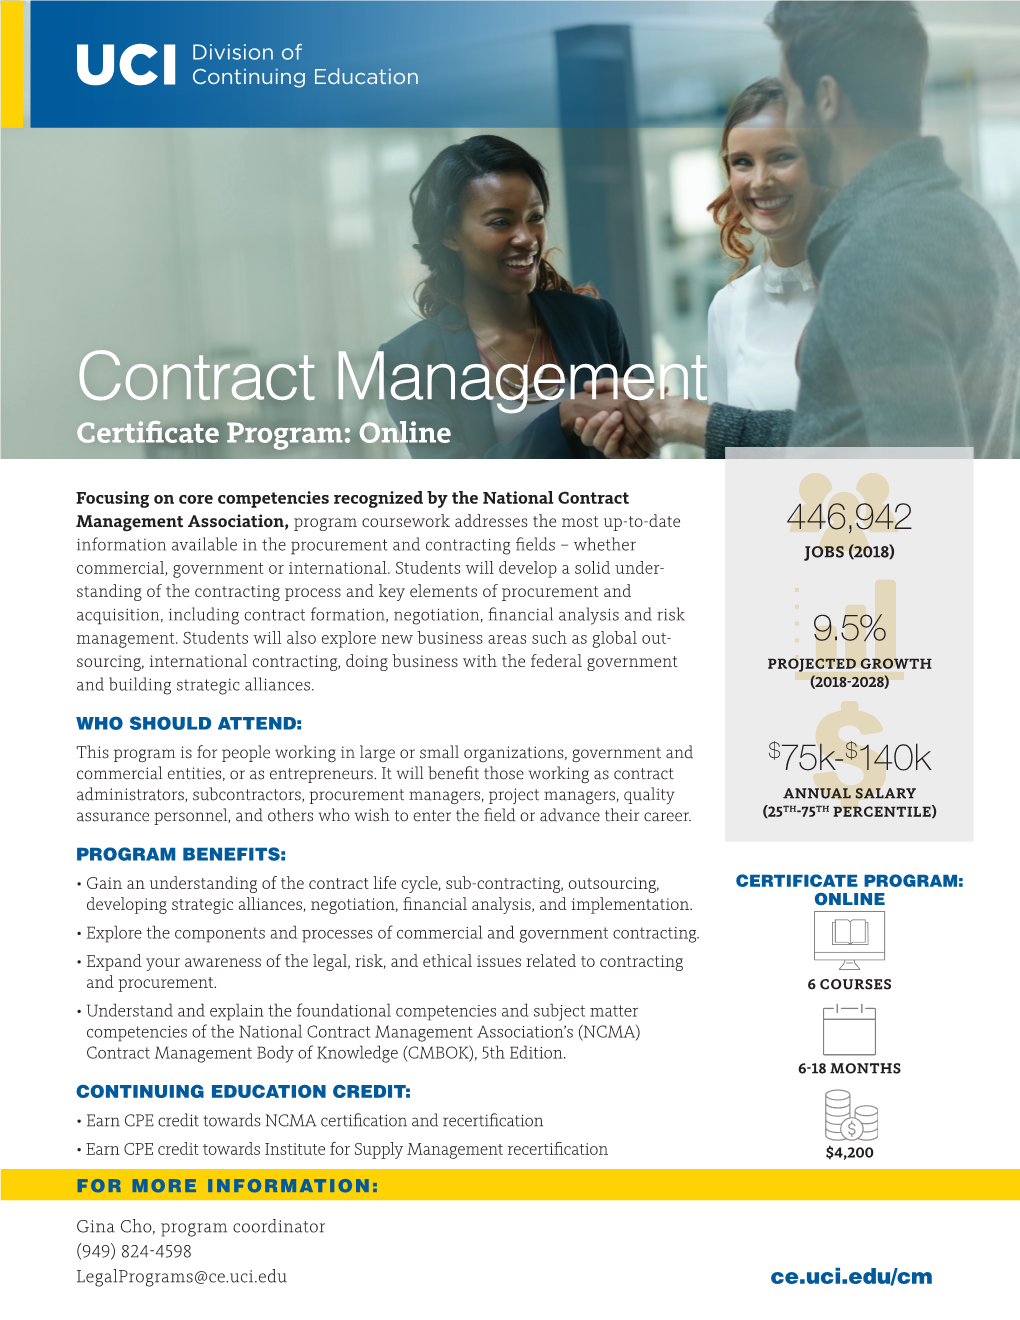 Contract Management Program Flyer